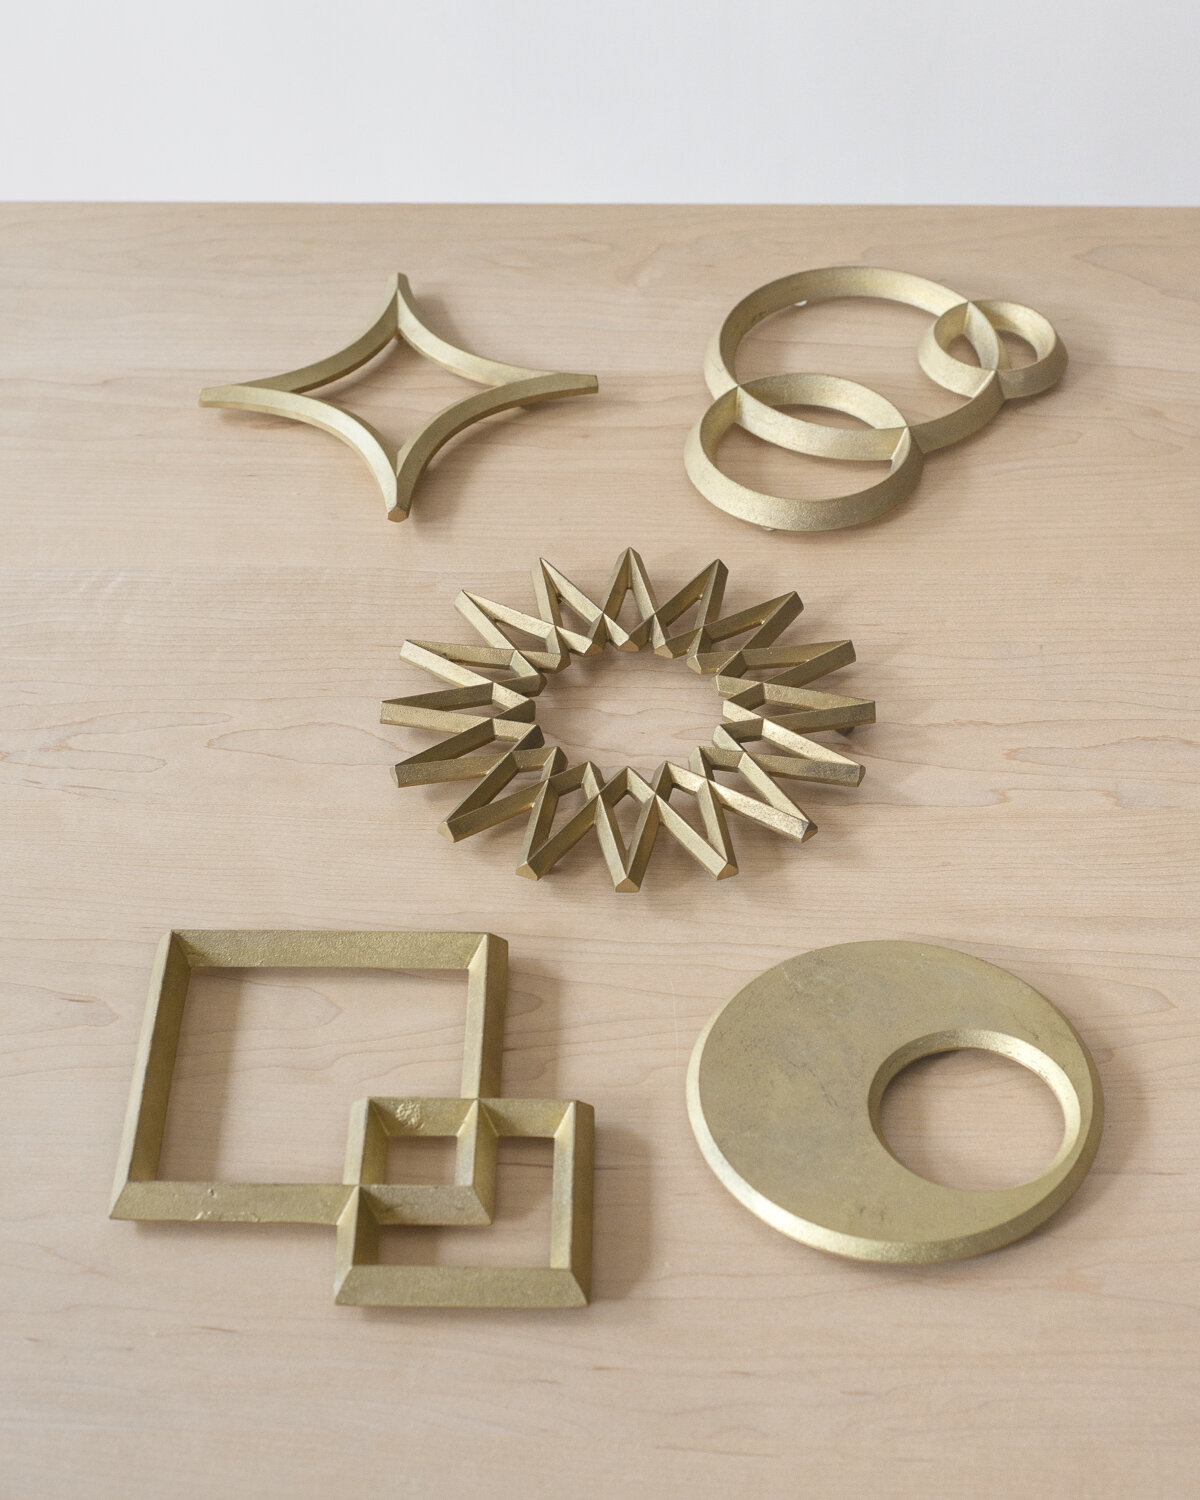 Japanese Brass Objects 真鍮の生活用品, Brass Trivet (Star) - Native & Co, Japanese Homeware Shop